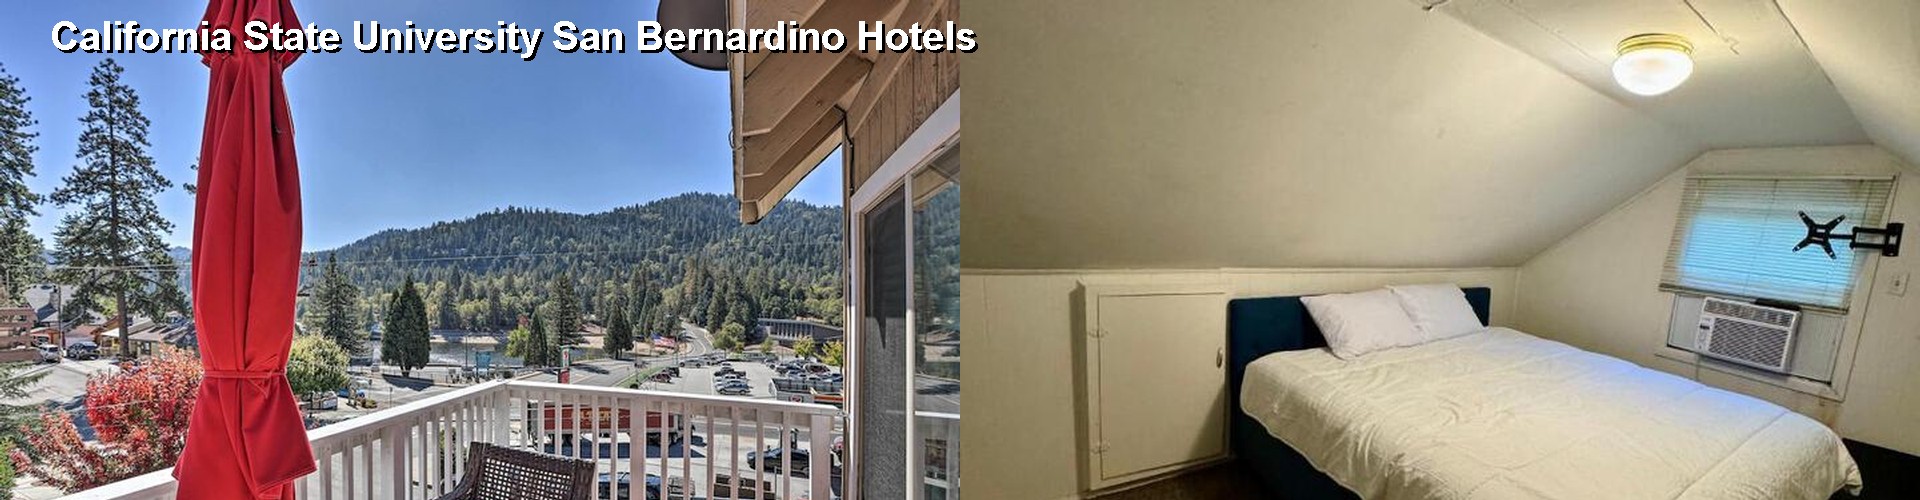 2 Best Hotels near California State University San Bernardino